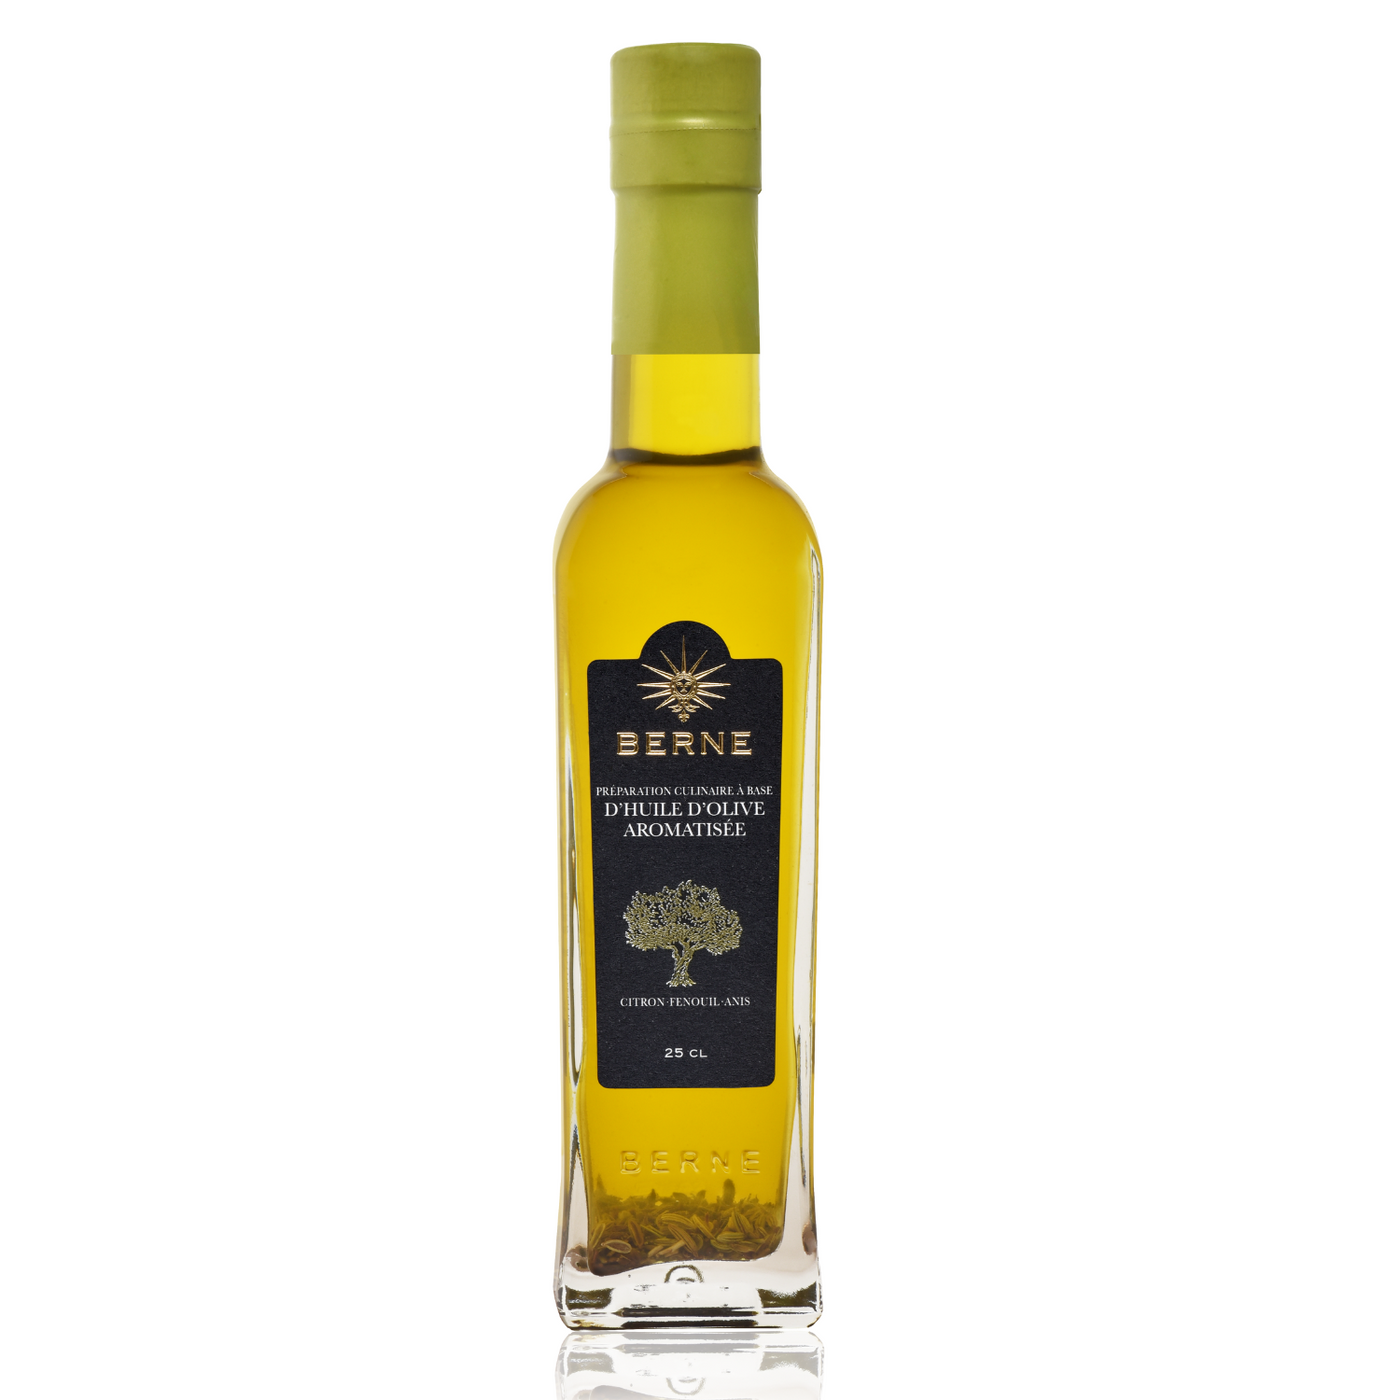 Berne - Lemon, venkel en anise met olijfolie gearomatiseerd